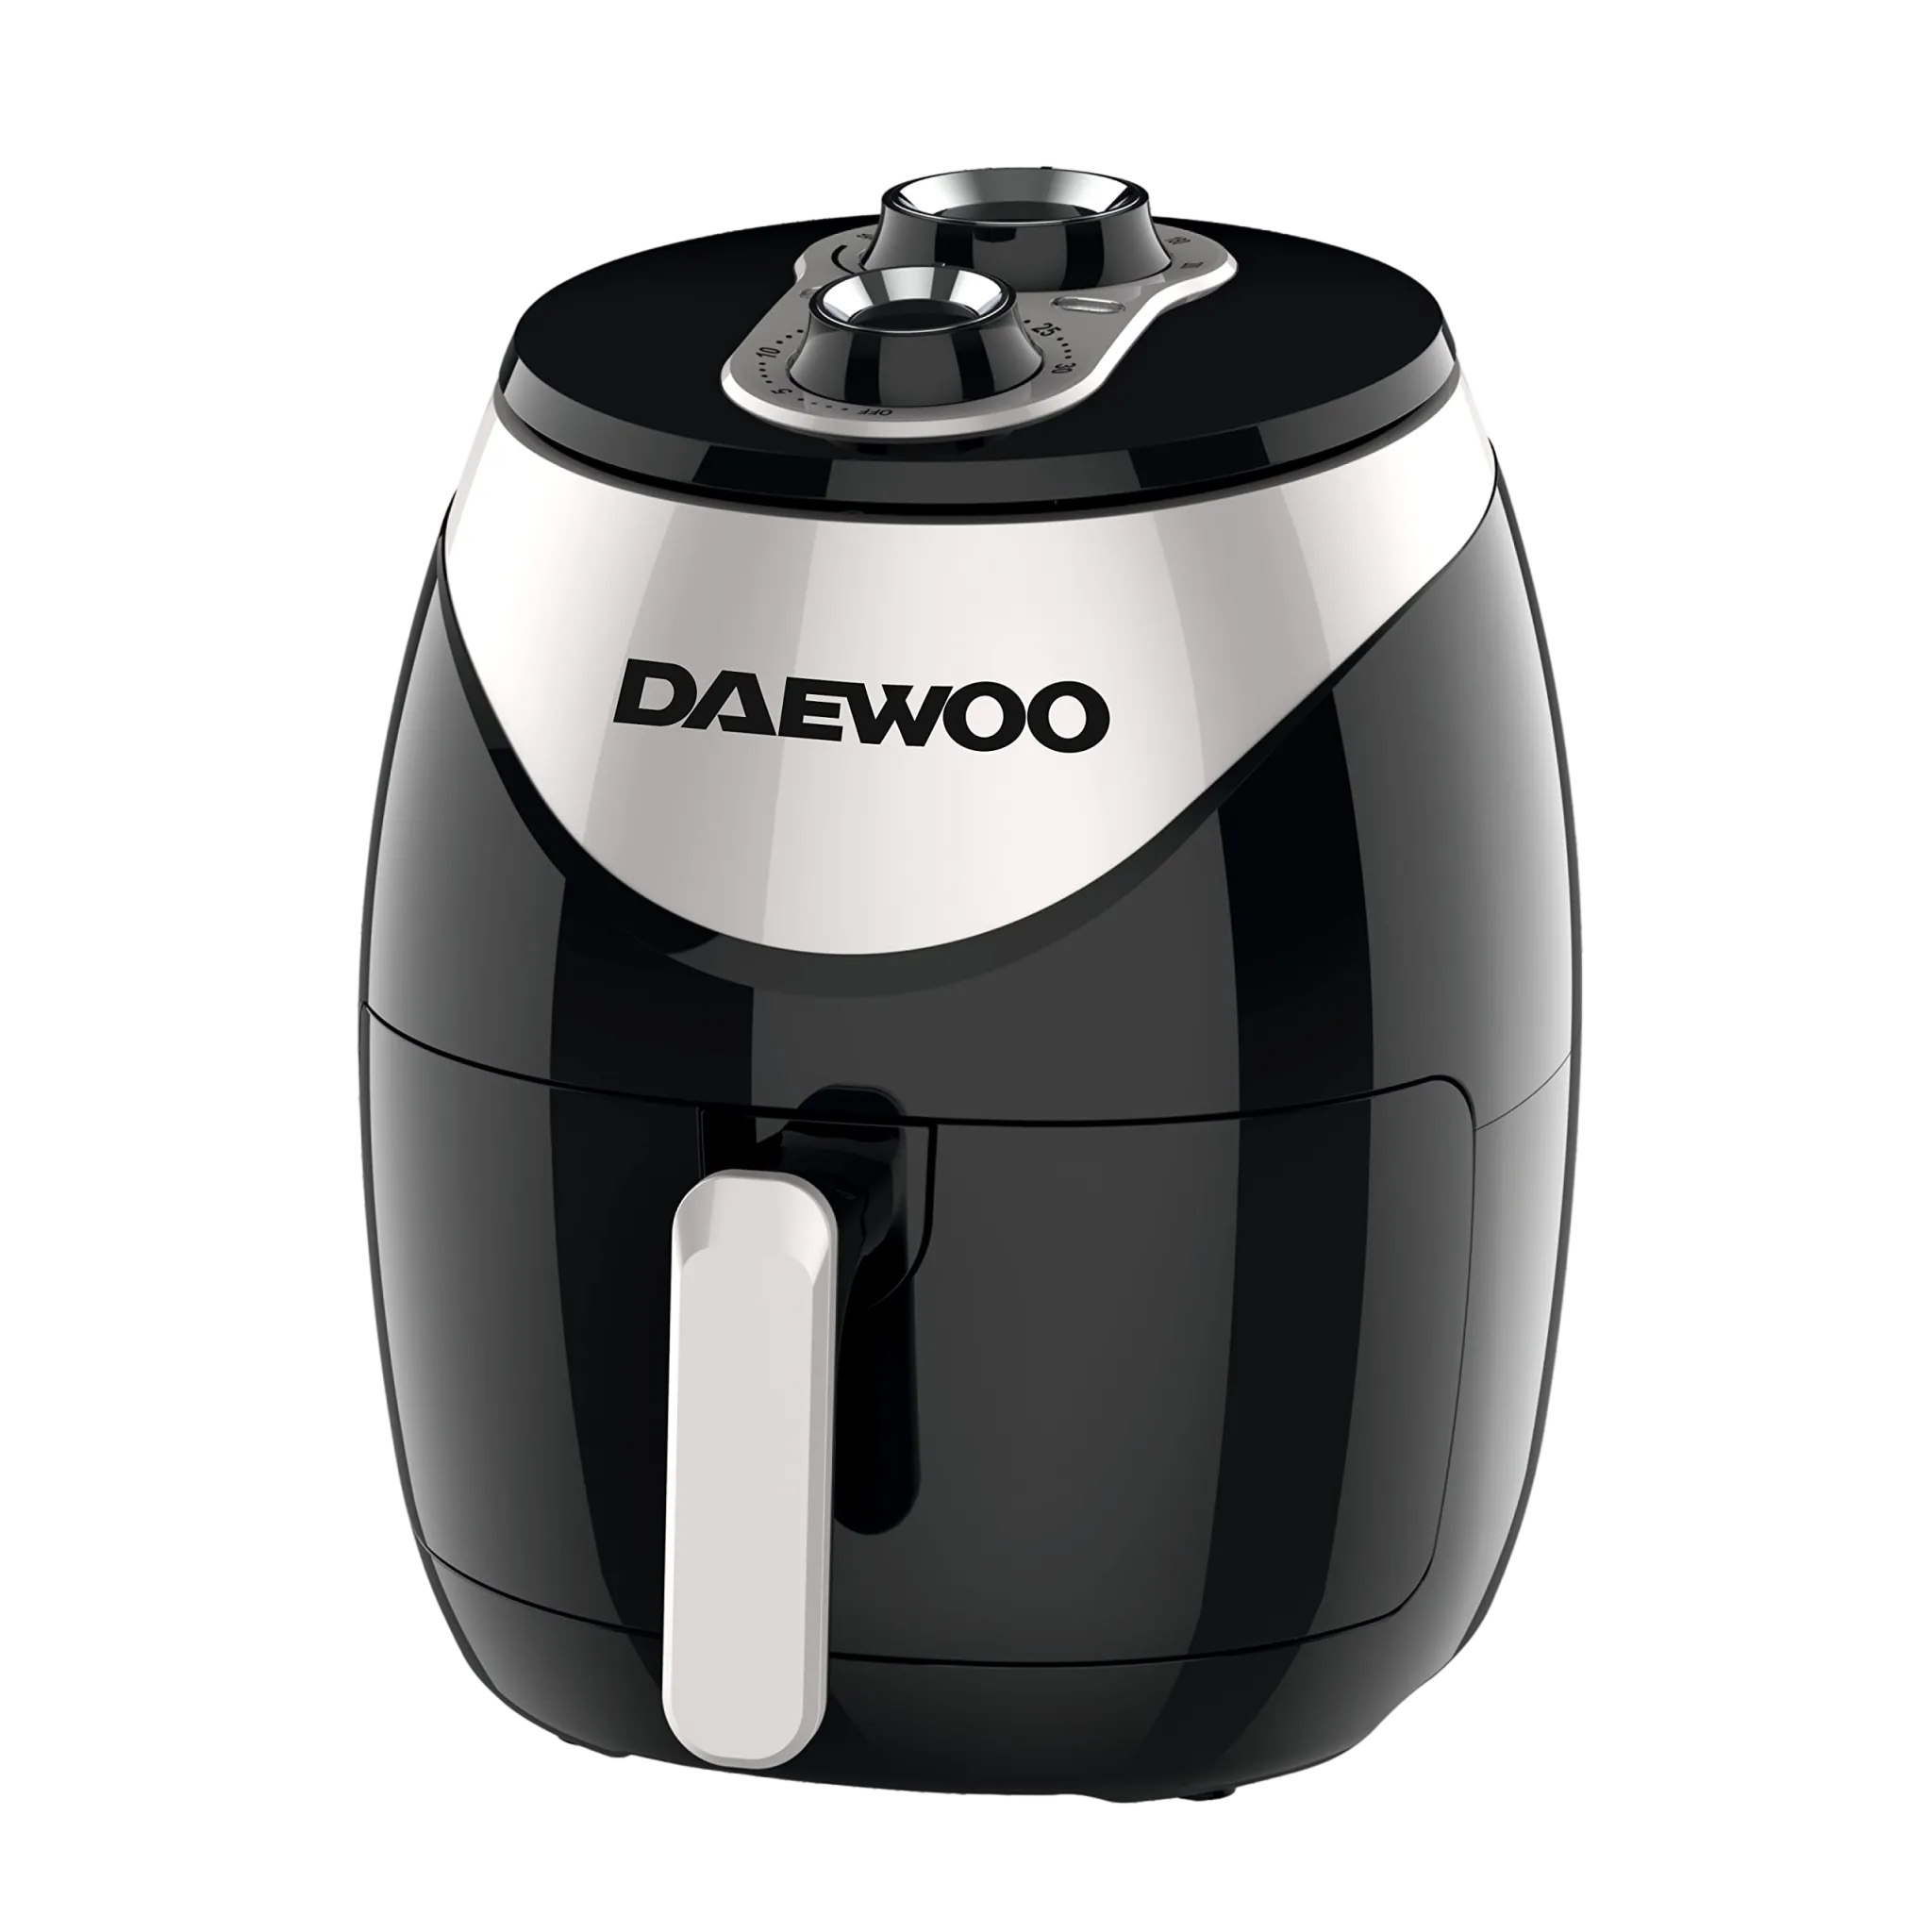 Daewoo 4 Liter Air Fryer with Rapid Air Circulation Technology 1500W Korean Technology DAF8017 Black/Silver - 2 Years Warranty